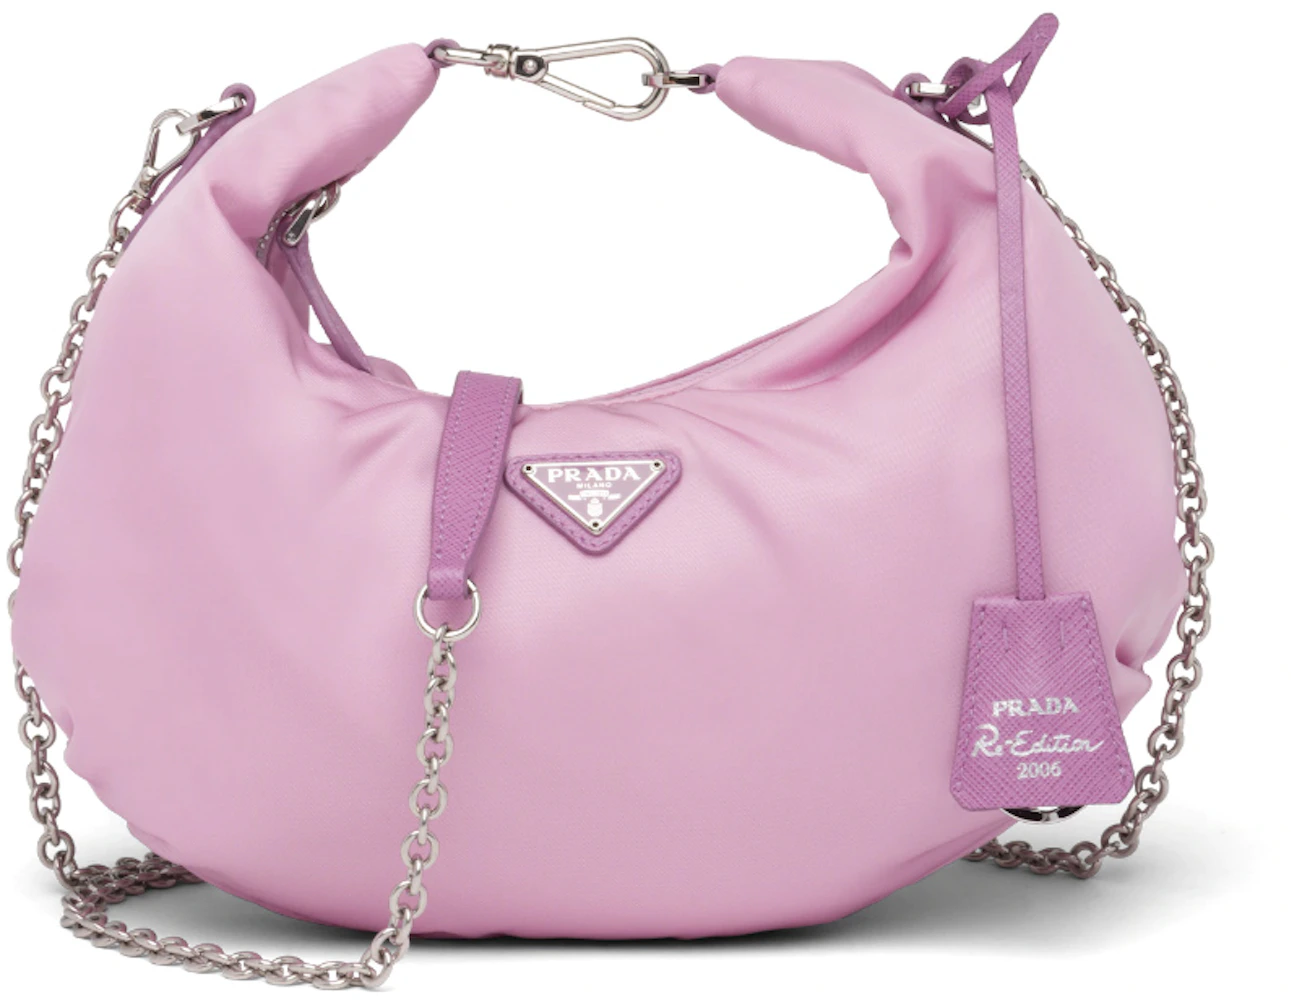 PRADA Re-Edition 2005 Pink Nylon Bag